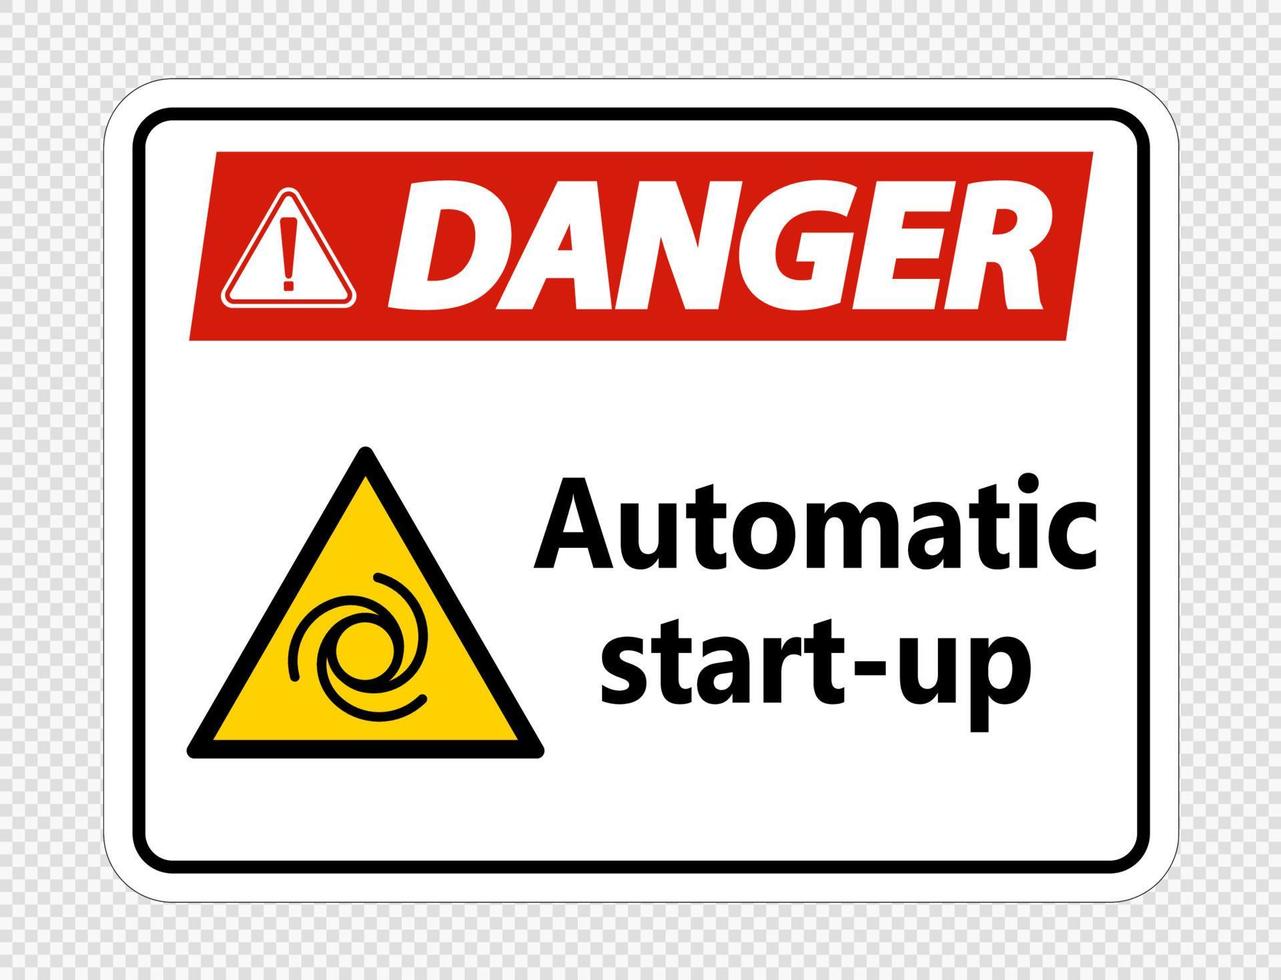 Danger automatic start-up sign on transparent background vector